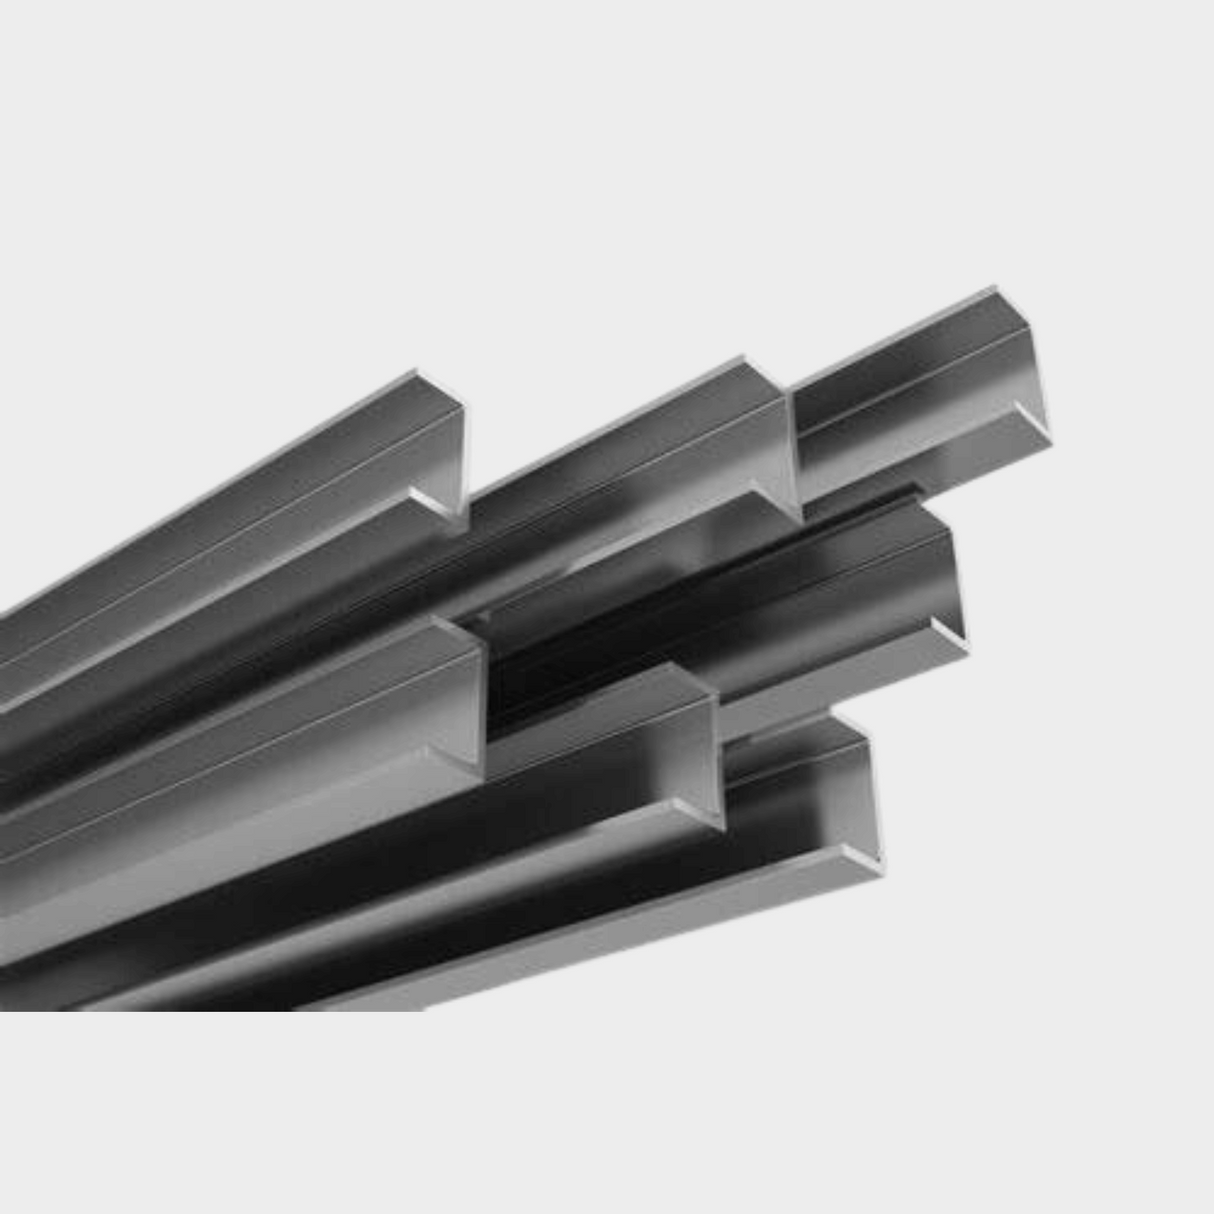 Samsung U Profile Aluminium - 4m Length for Duct Frame Construction